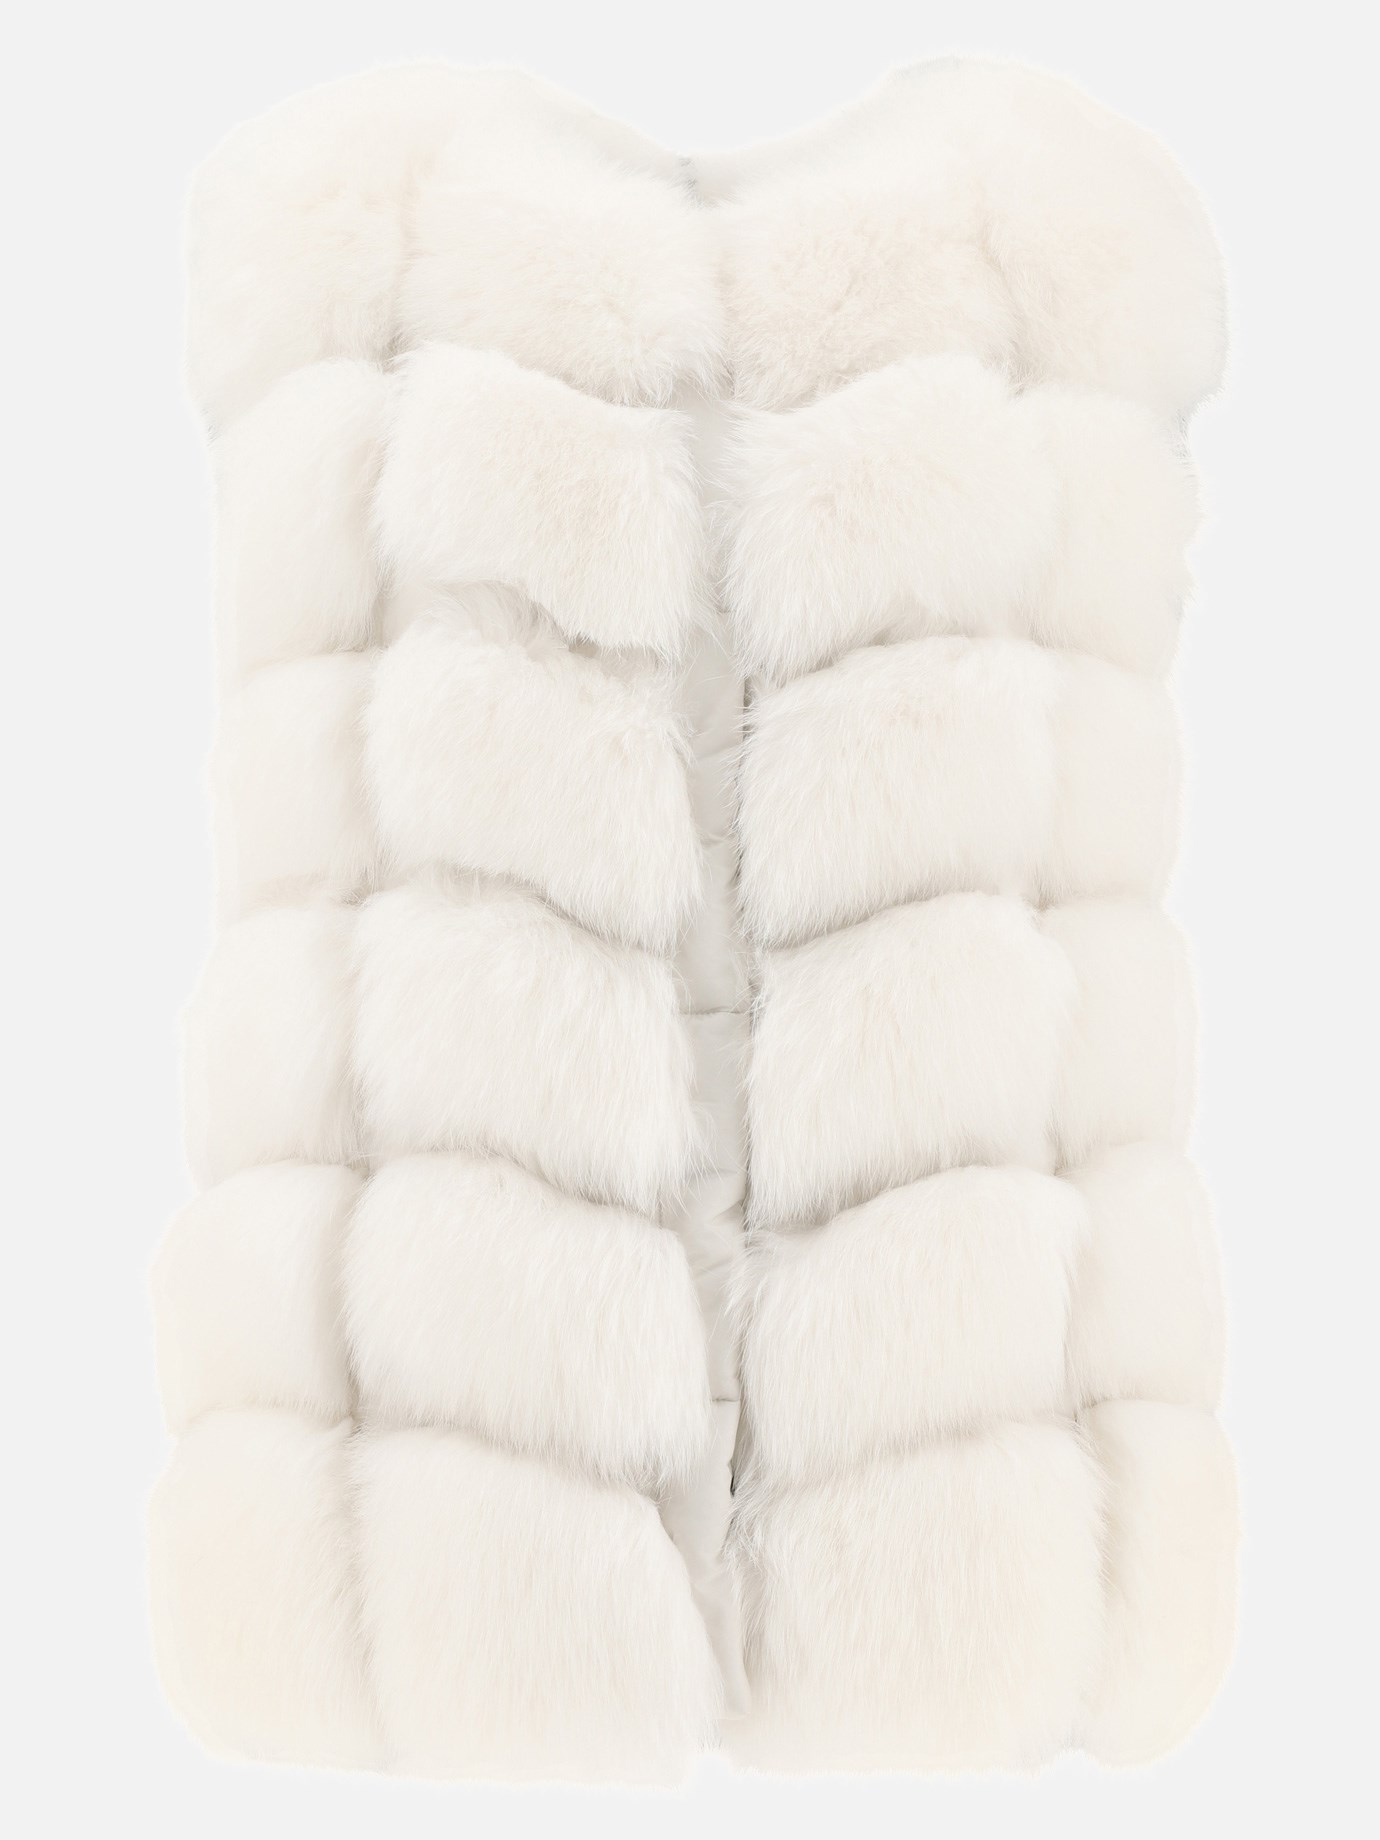  Quadrotti  sleeveless fur jacket by Frame Fur